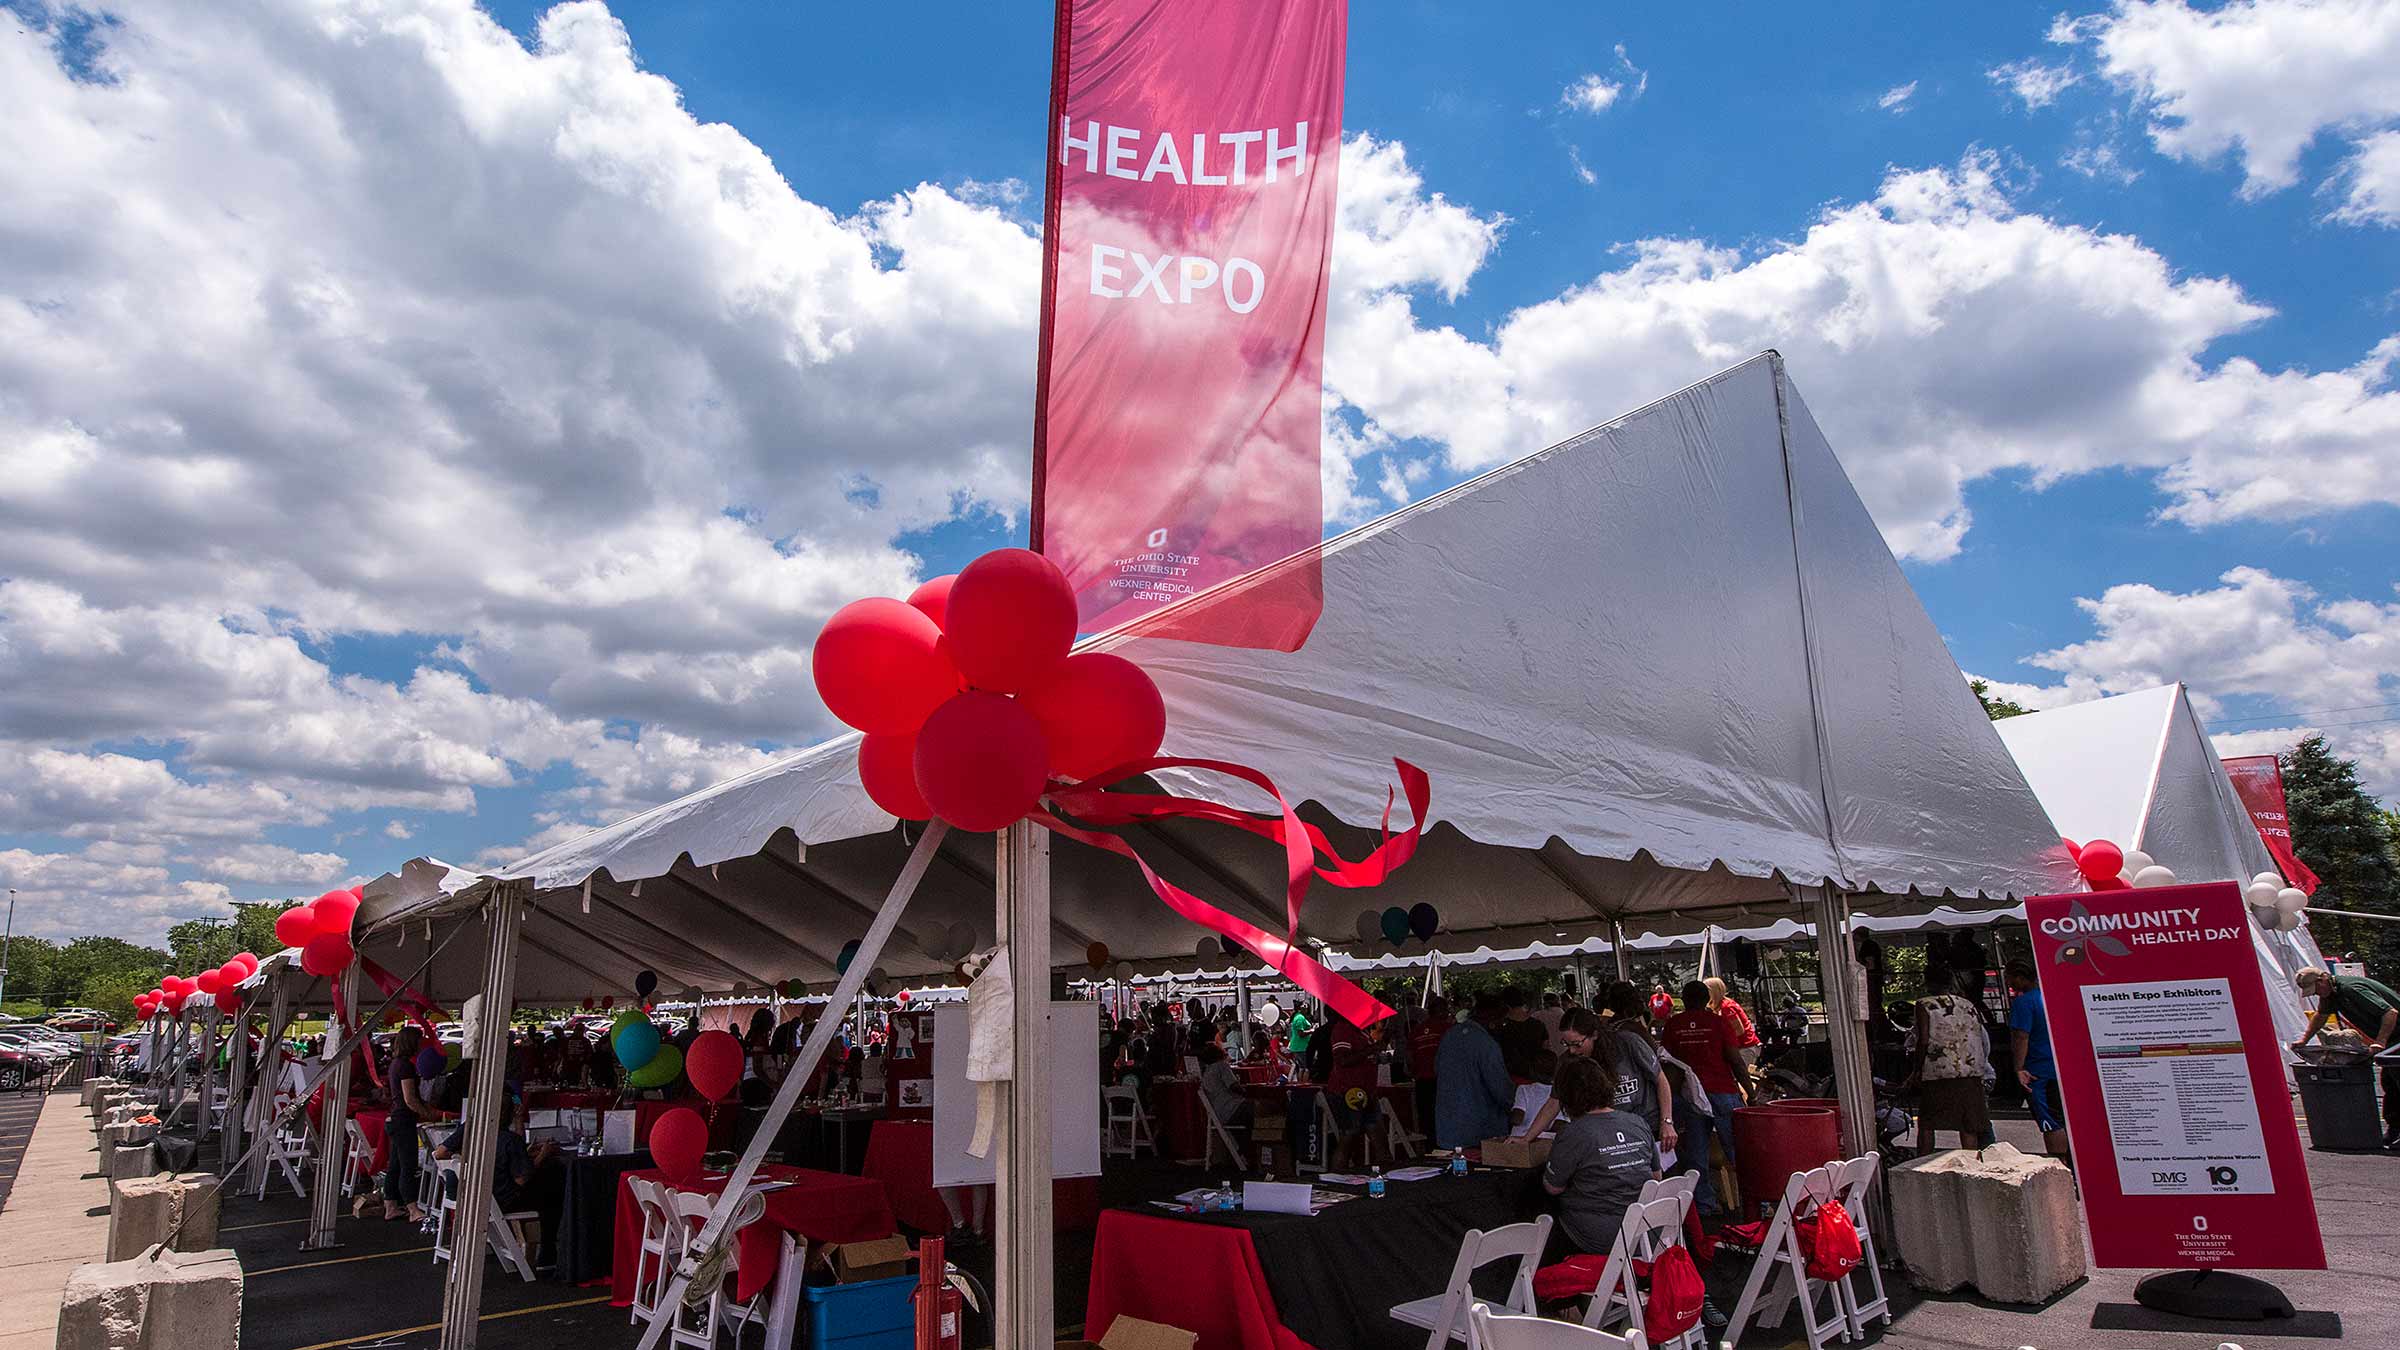 Health expo tents